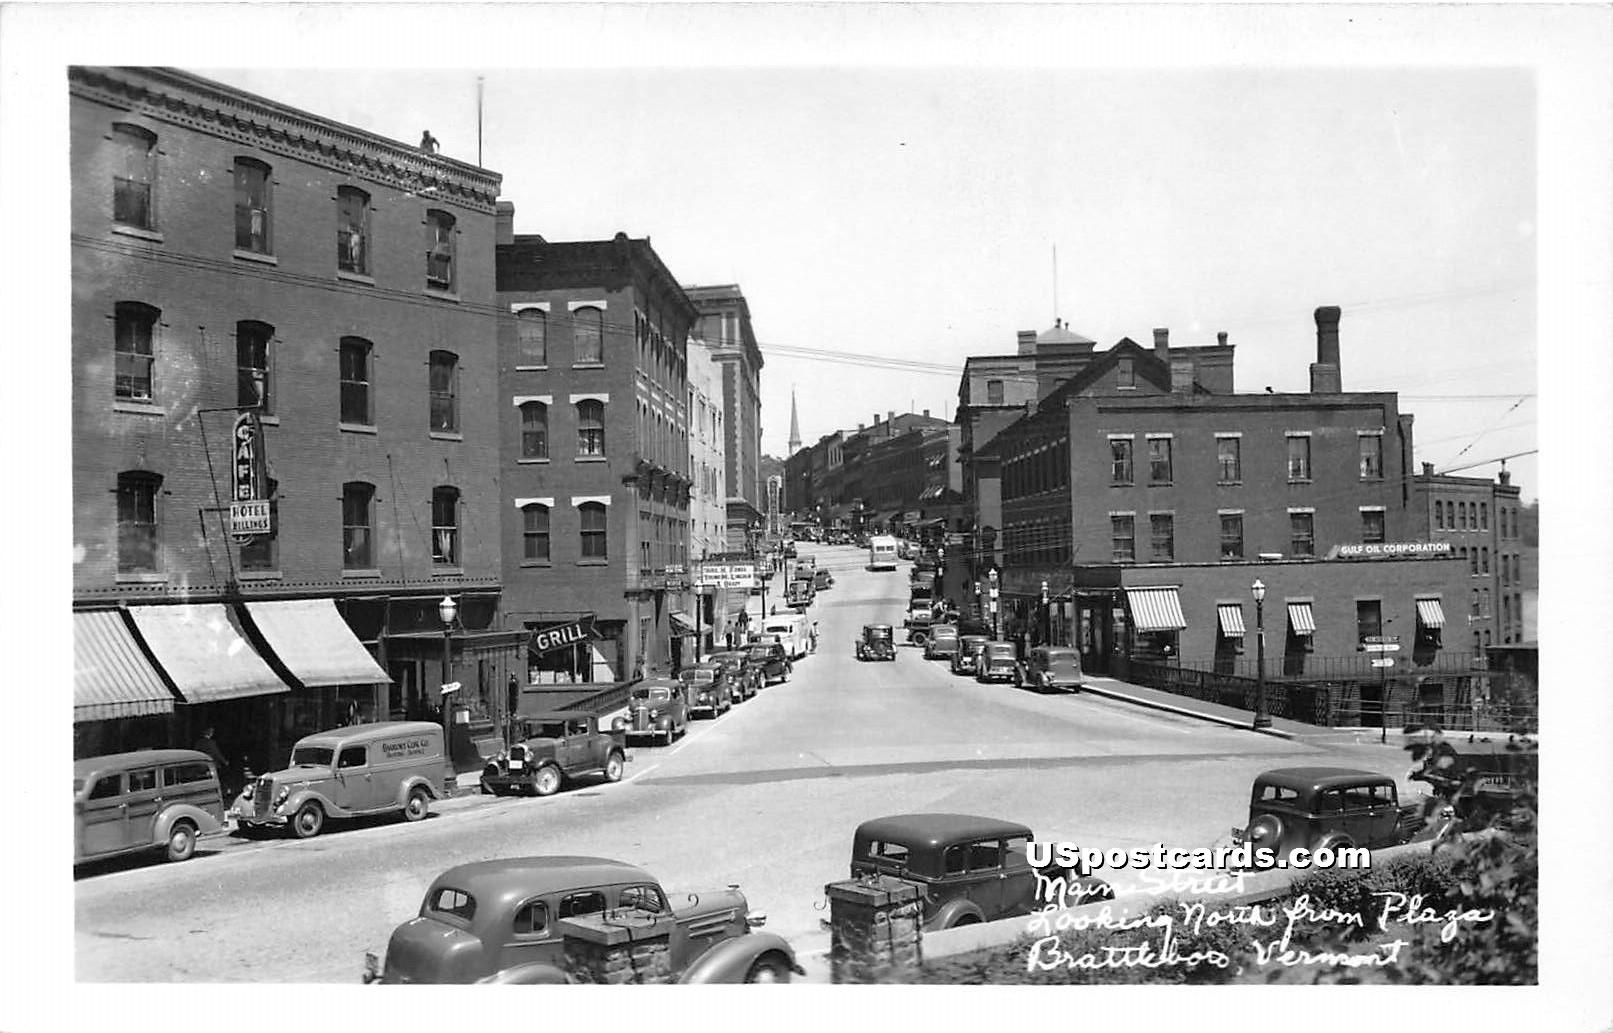 Main Street - Brattleboro, Vermont VT Postcard